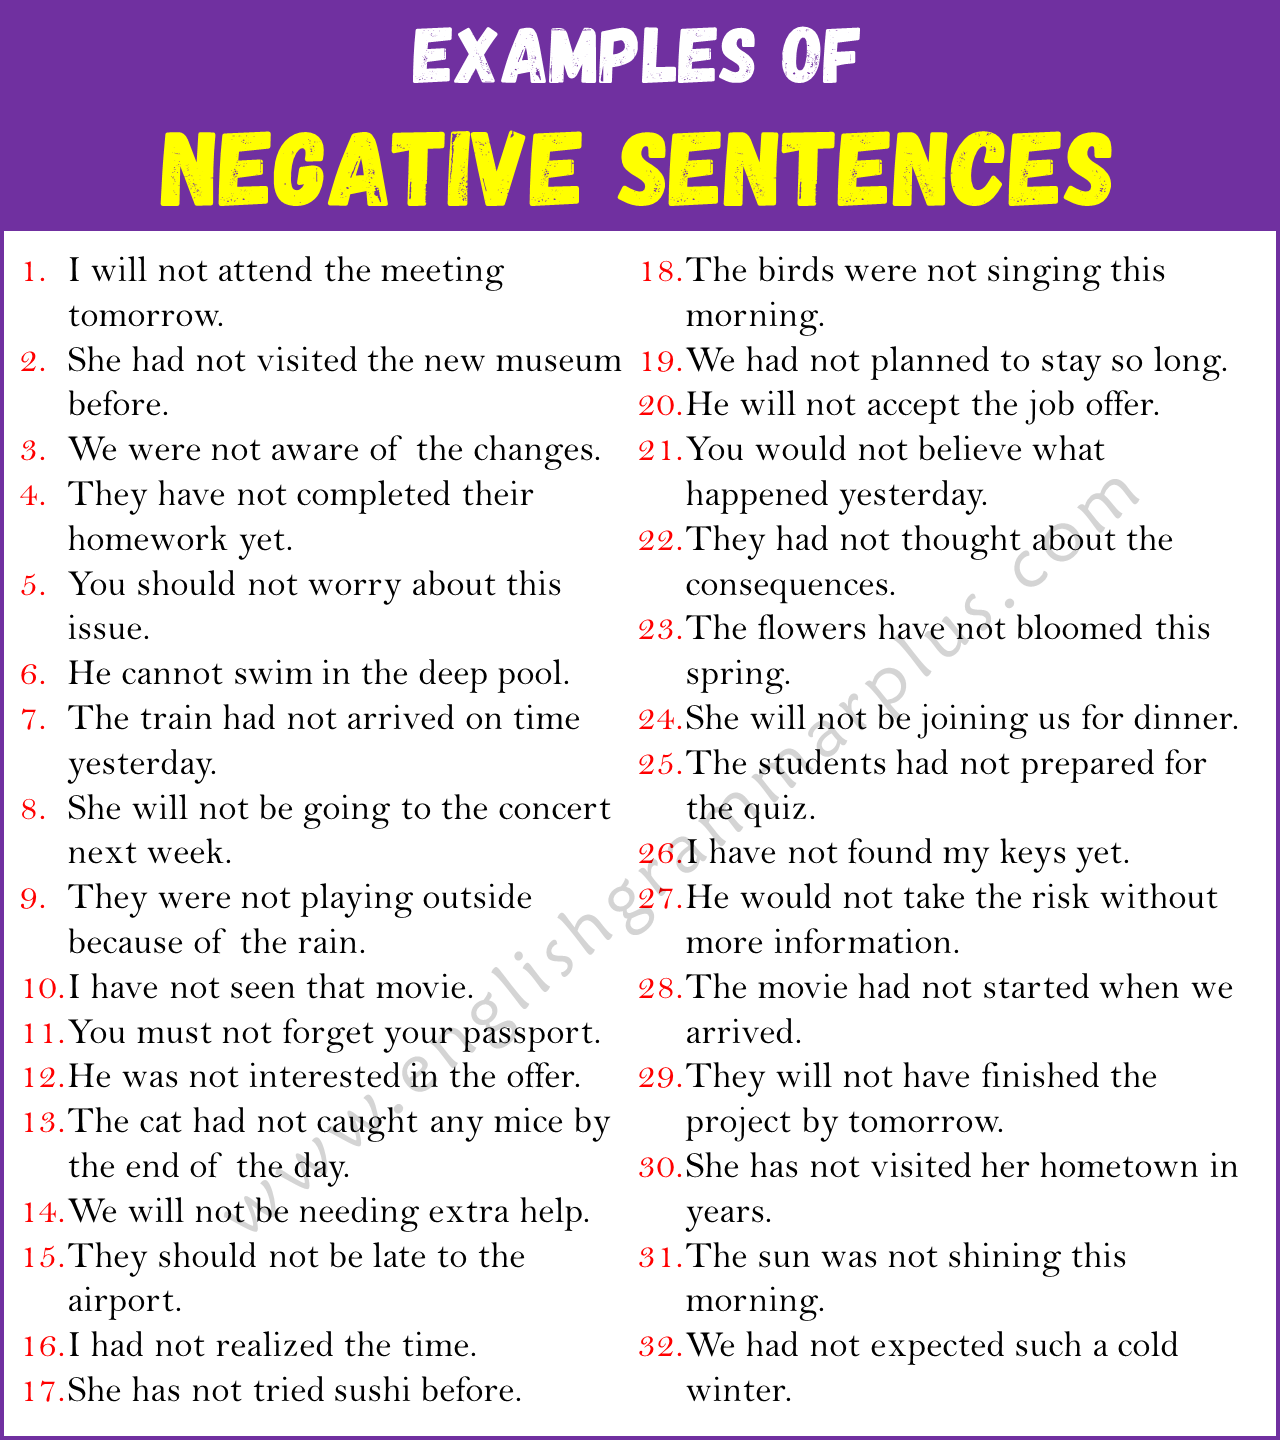 Examples of Negative Sentences